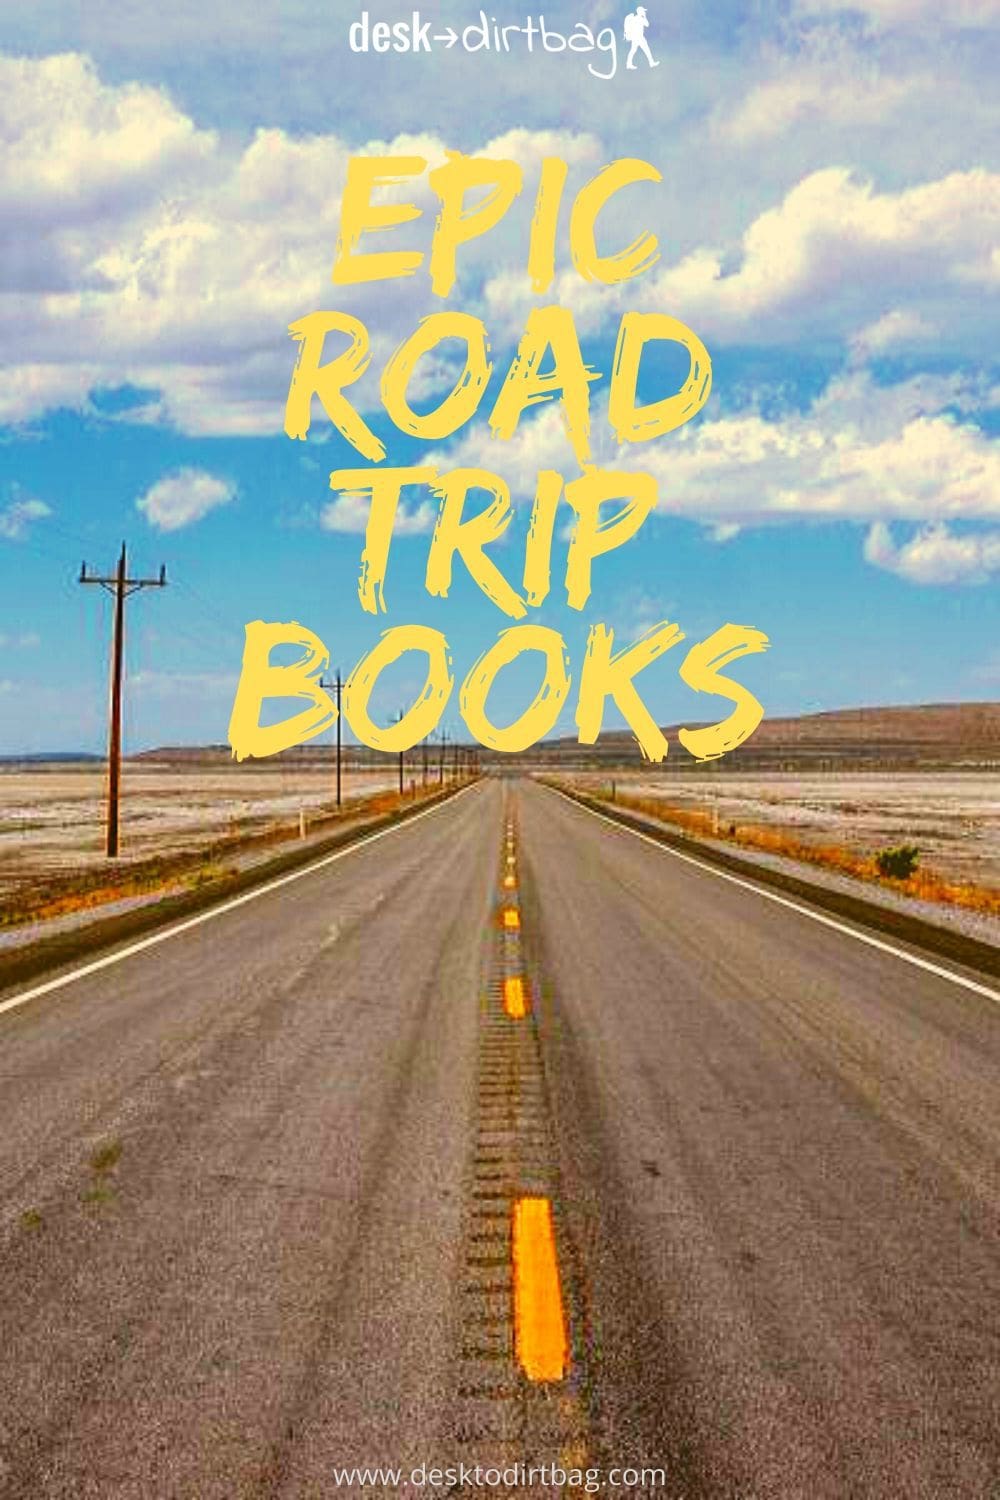 american road trip book theme